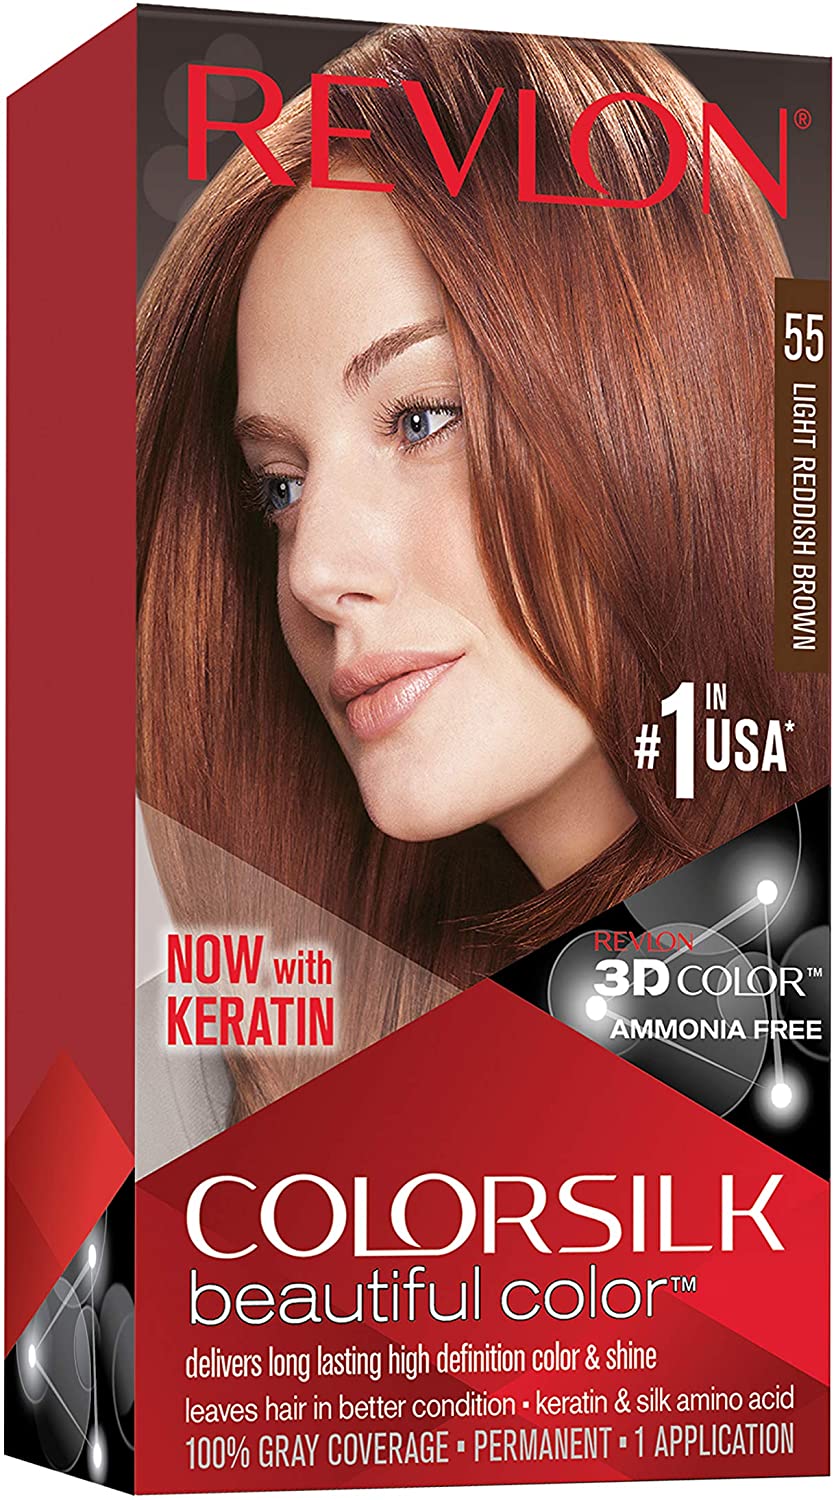 Revlon ColorSilk Hair Colour [55] Light Reddish Brown